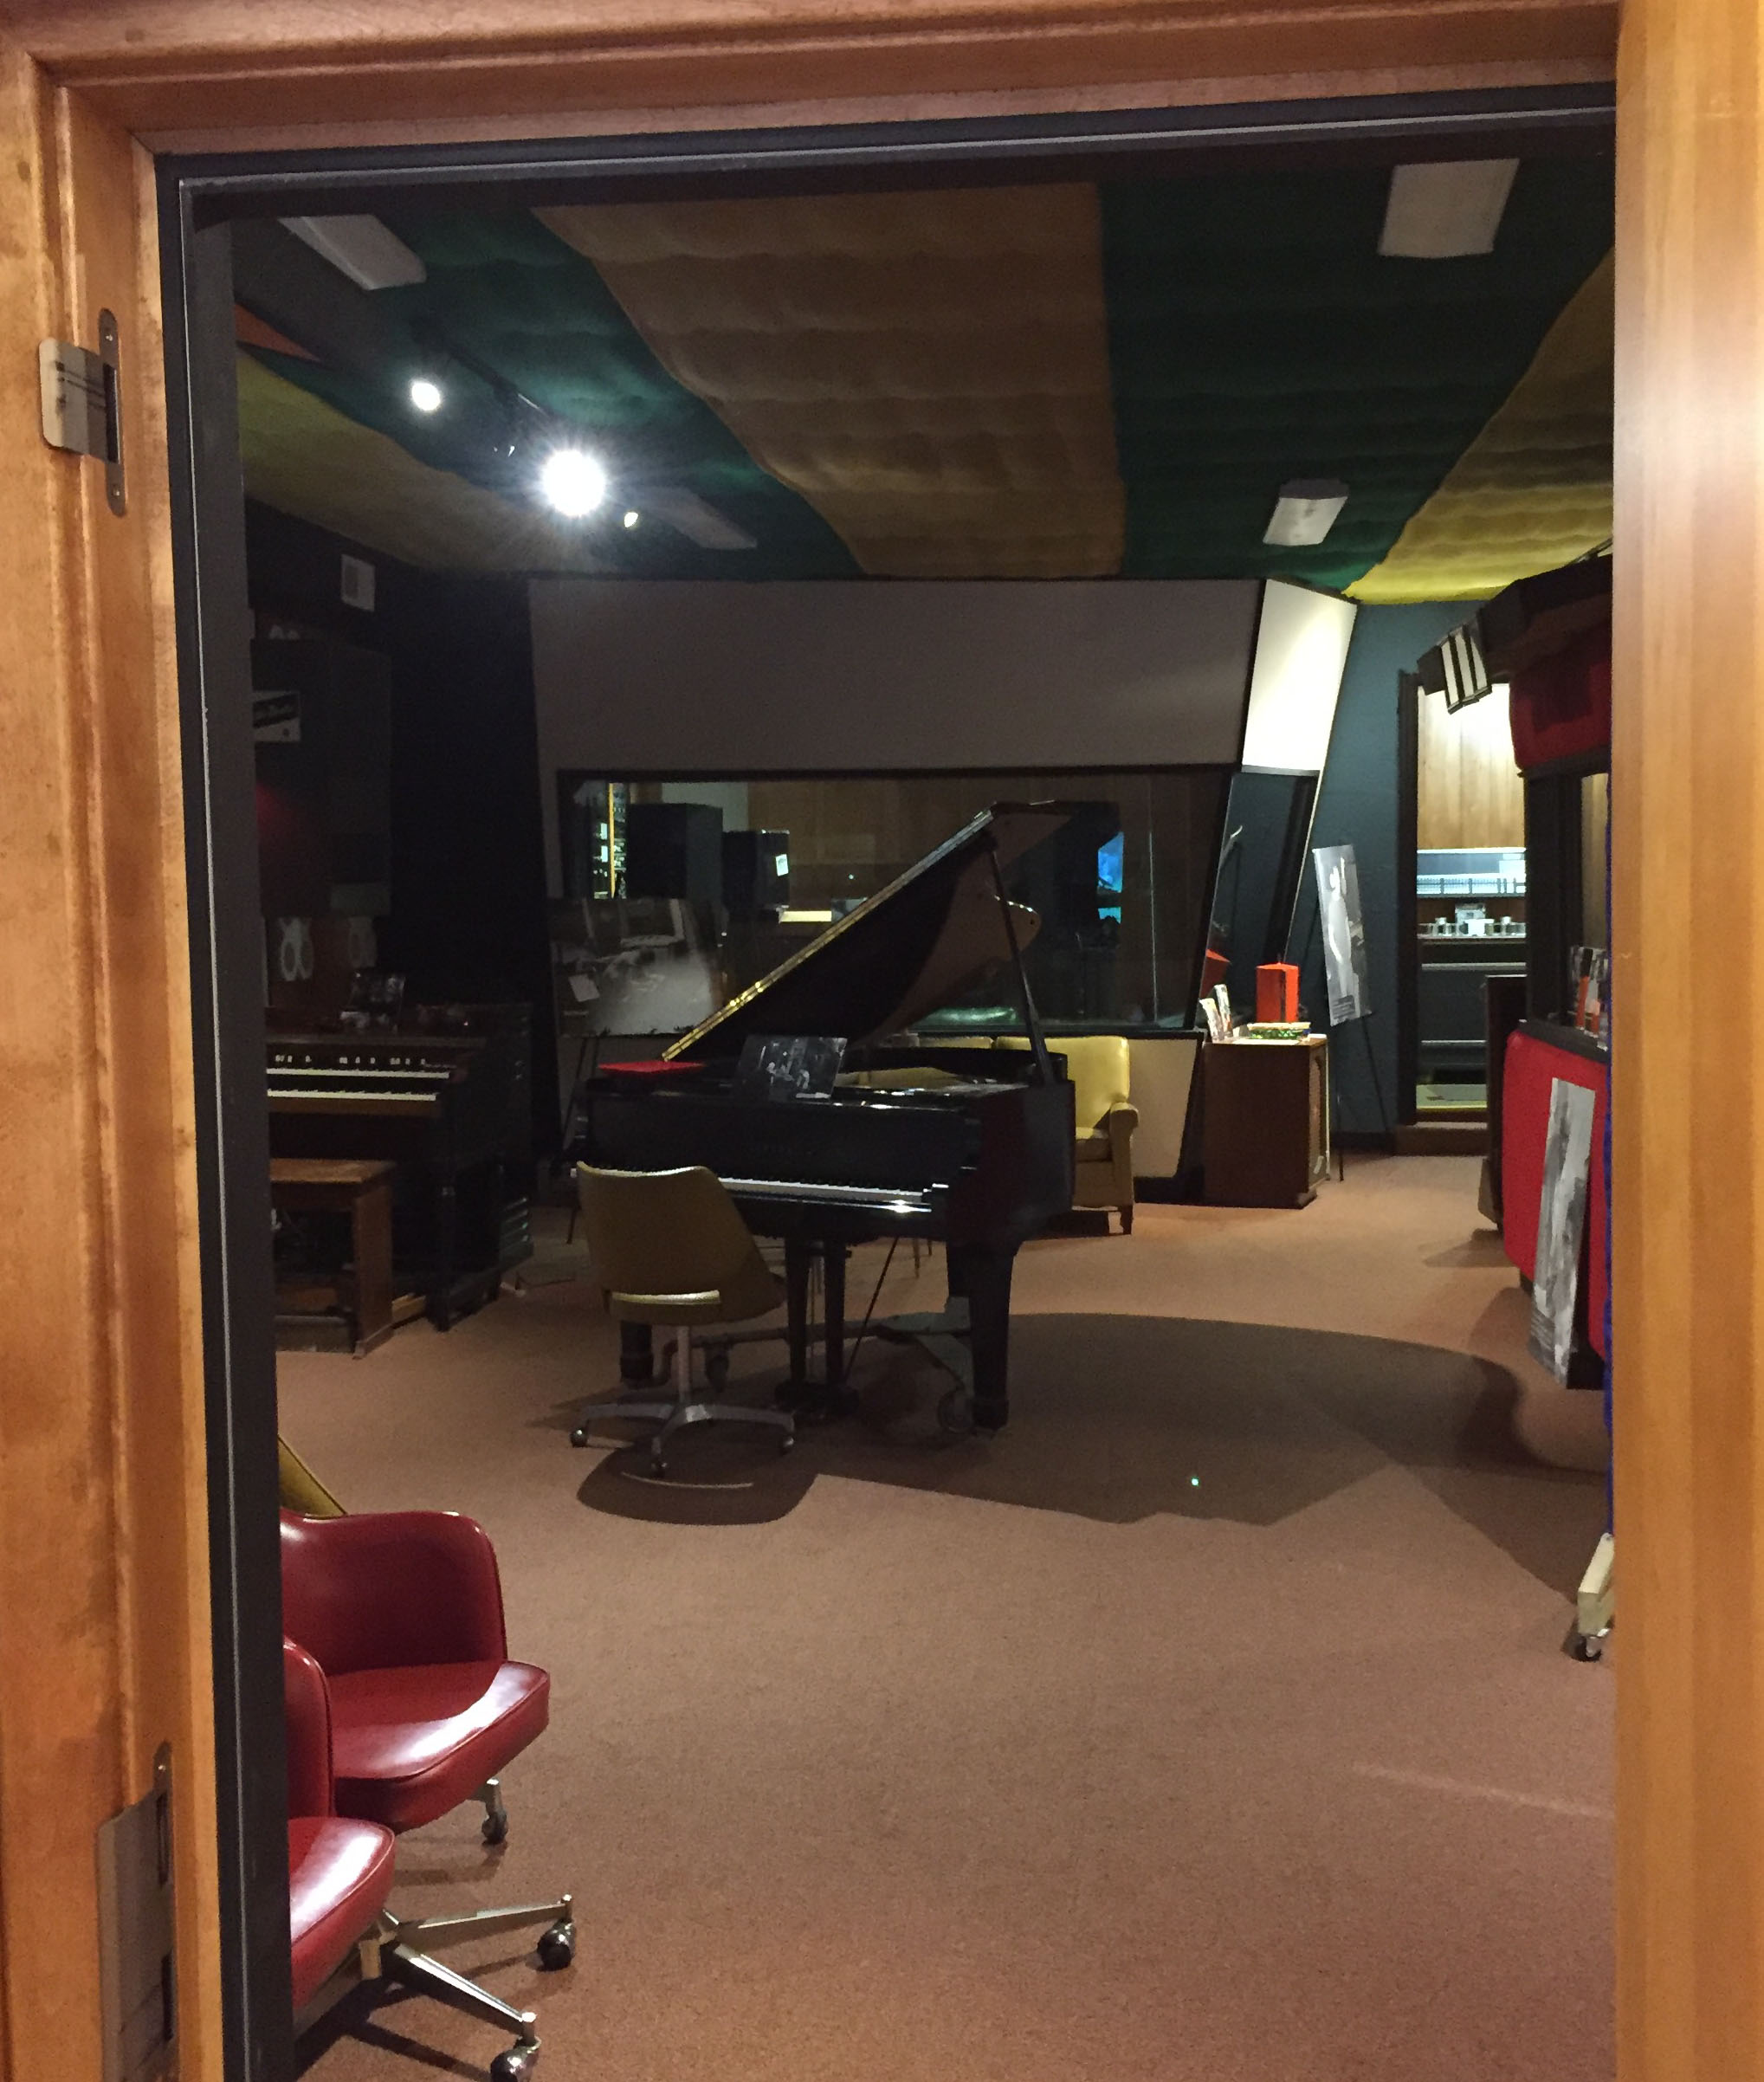 muscle shoals sound studio museum